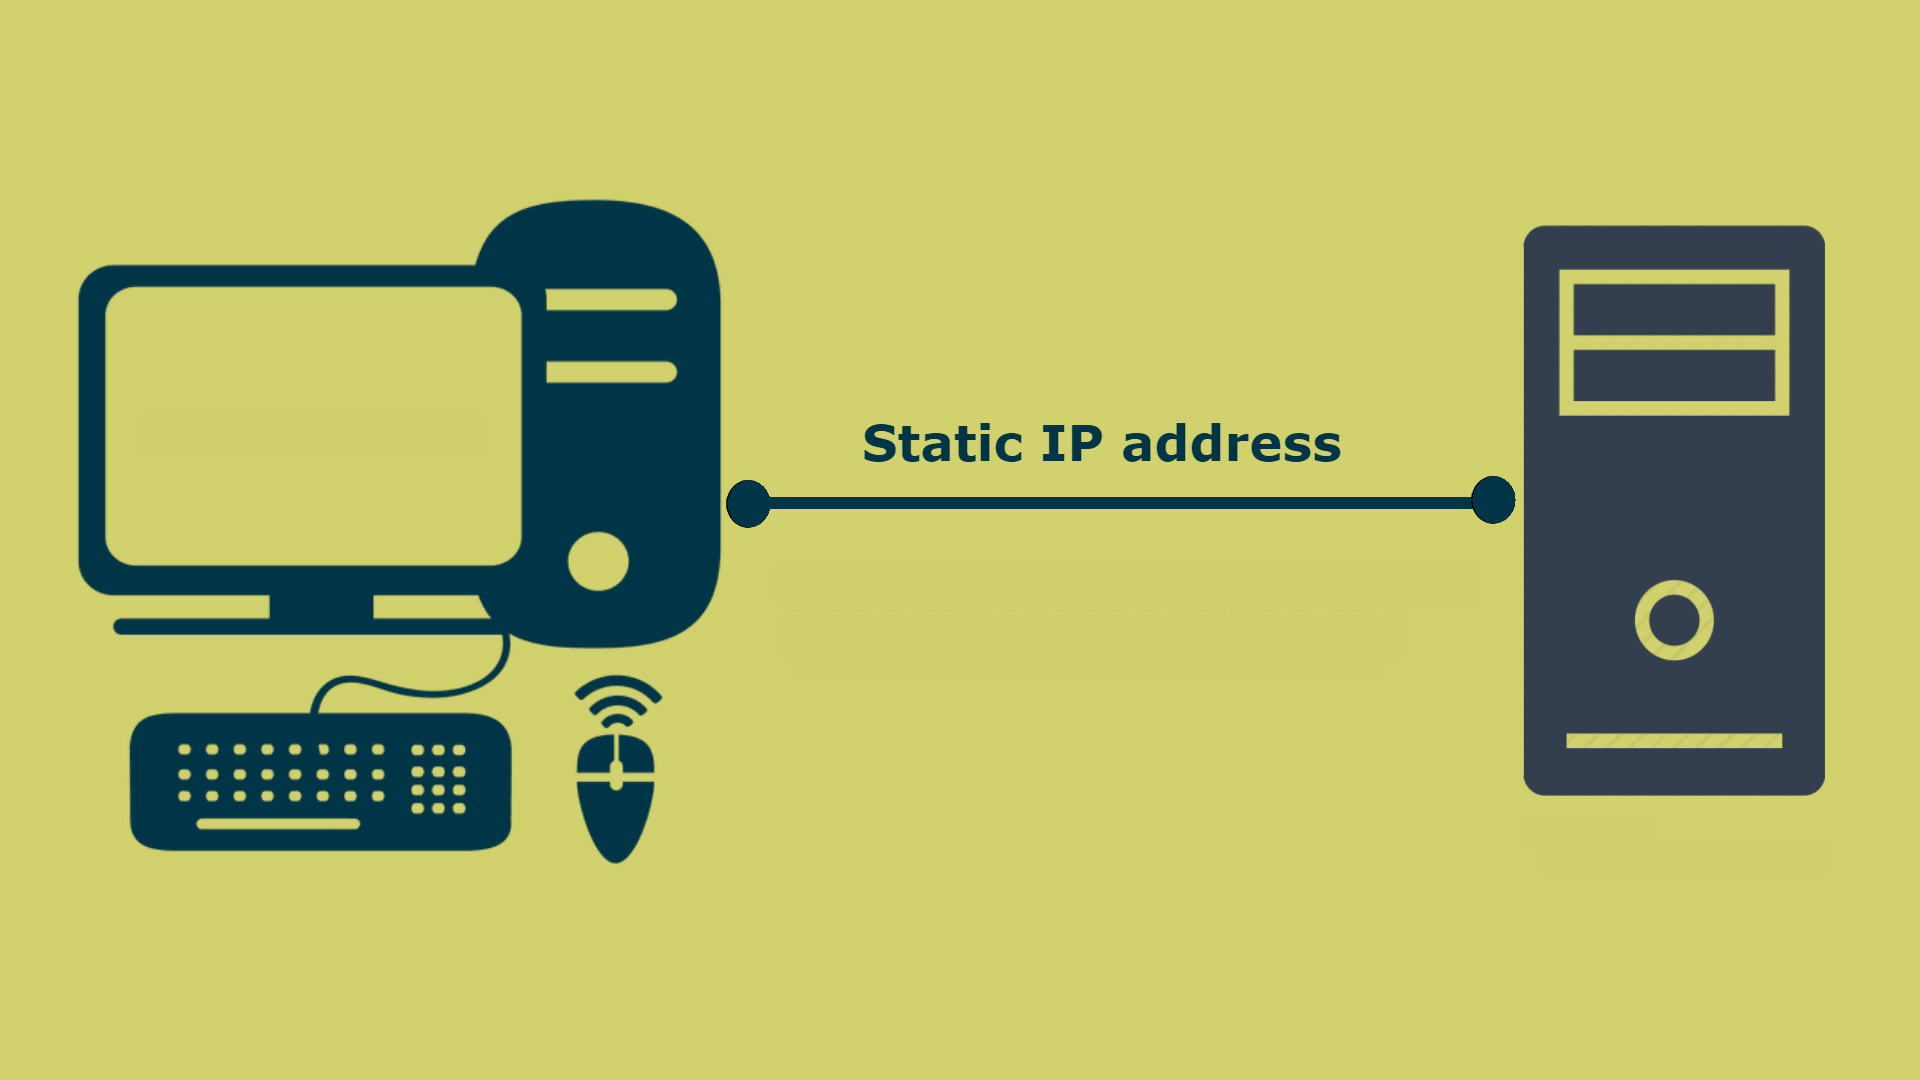 Web address is. Статический IP адрес. Статичный IP адрес. Статический IP картинка. Интернет статический IP.